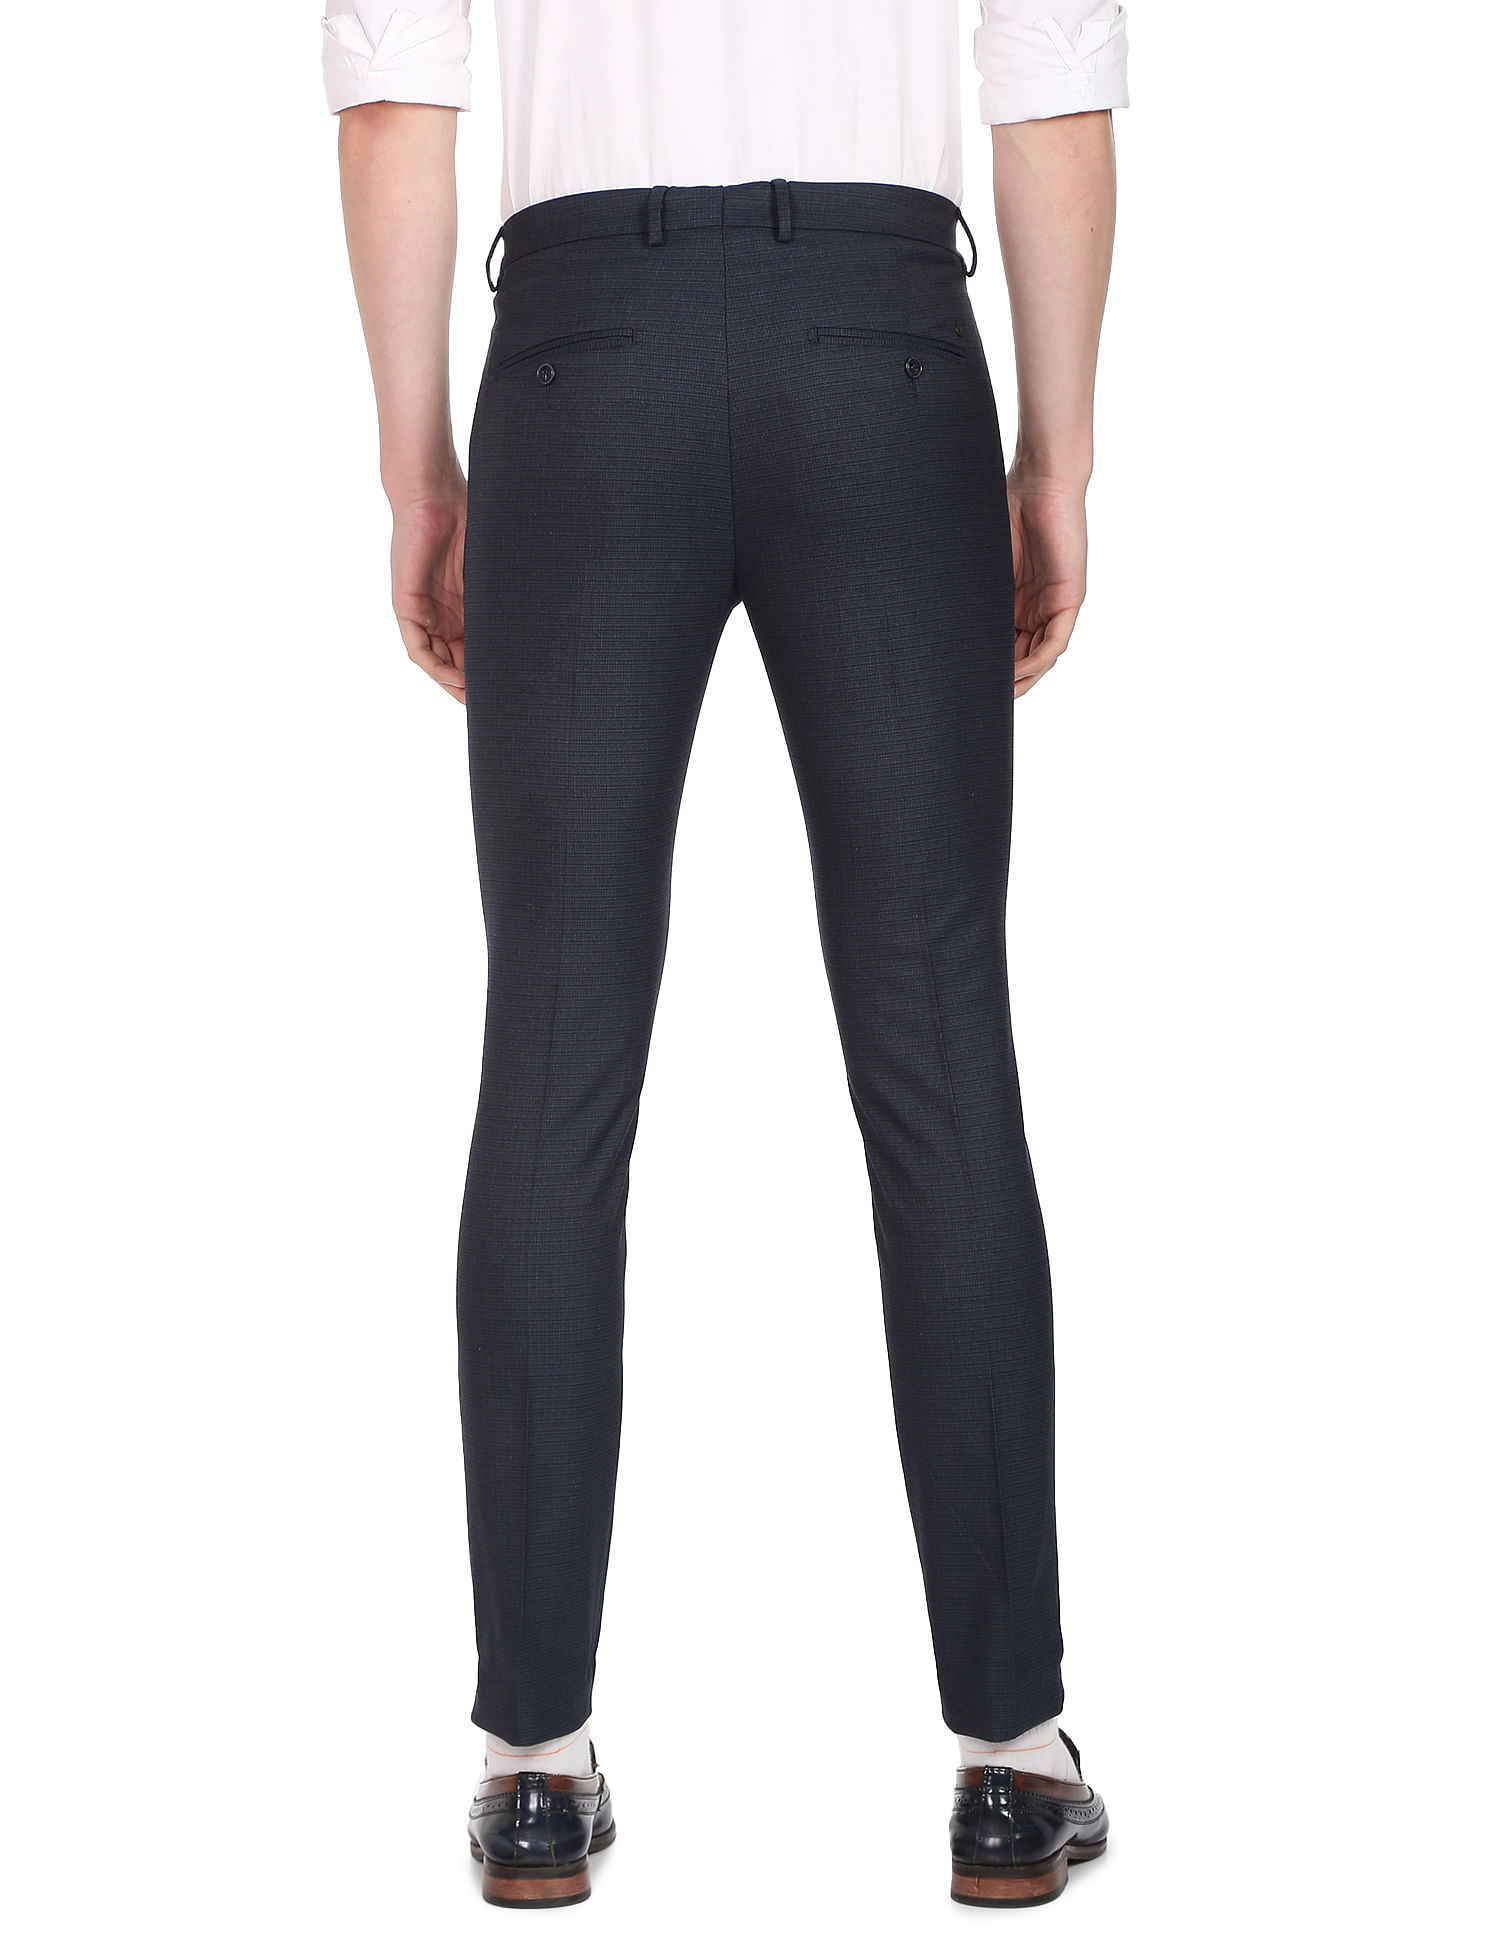 Limehaus Navy Dot Super Skinny Suit Trouser